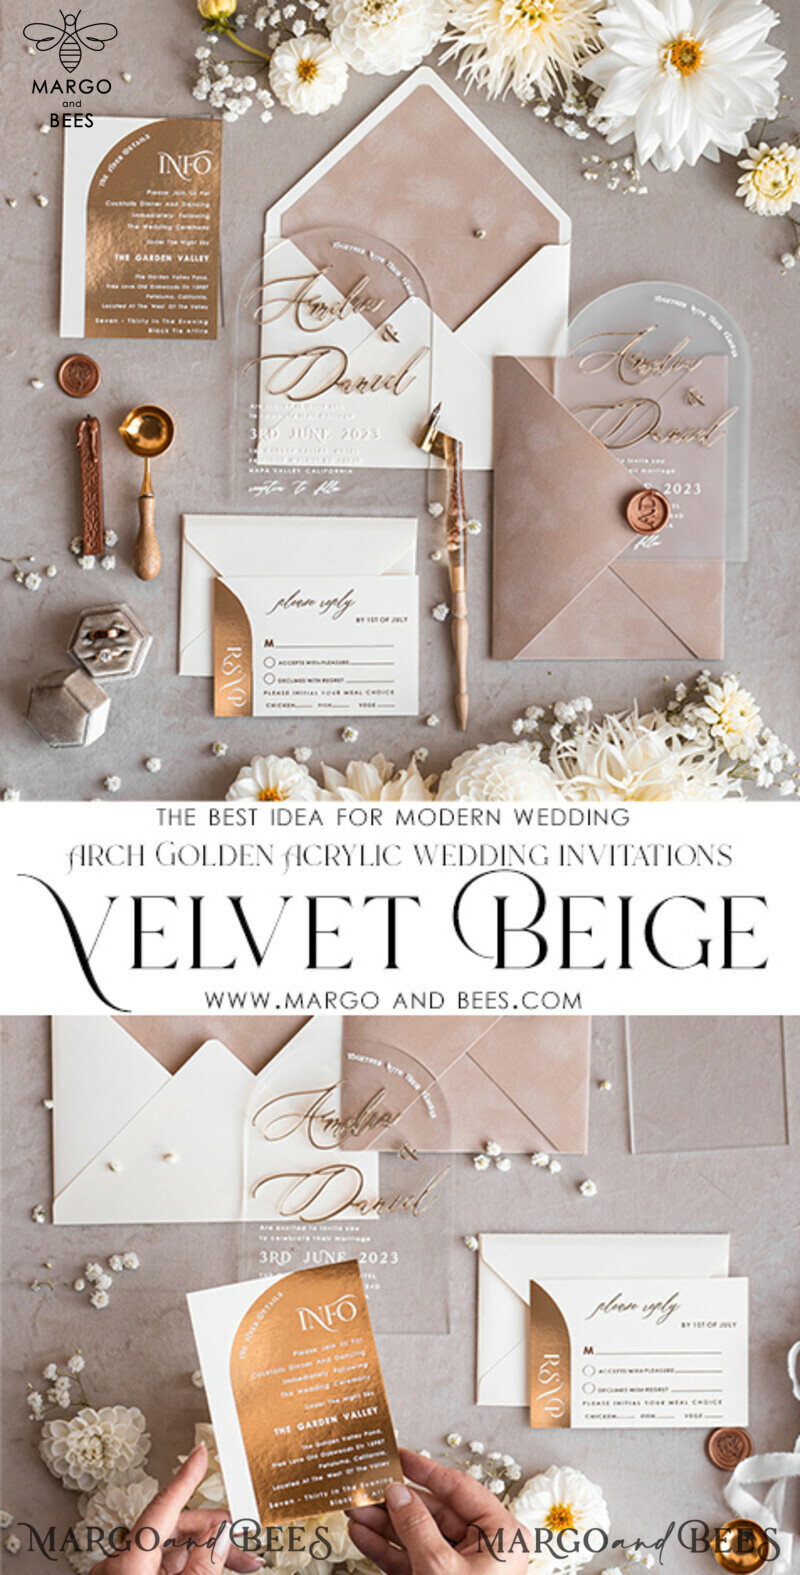 Elegant Arch Golden Acrylic Wedding Invitation Suite with Velvet Beige and Glamour Plexi Glass Details-6